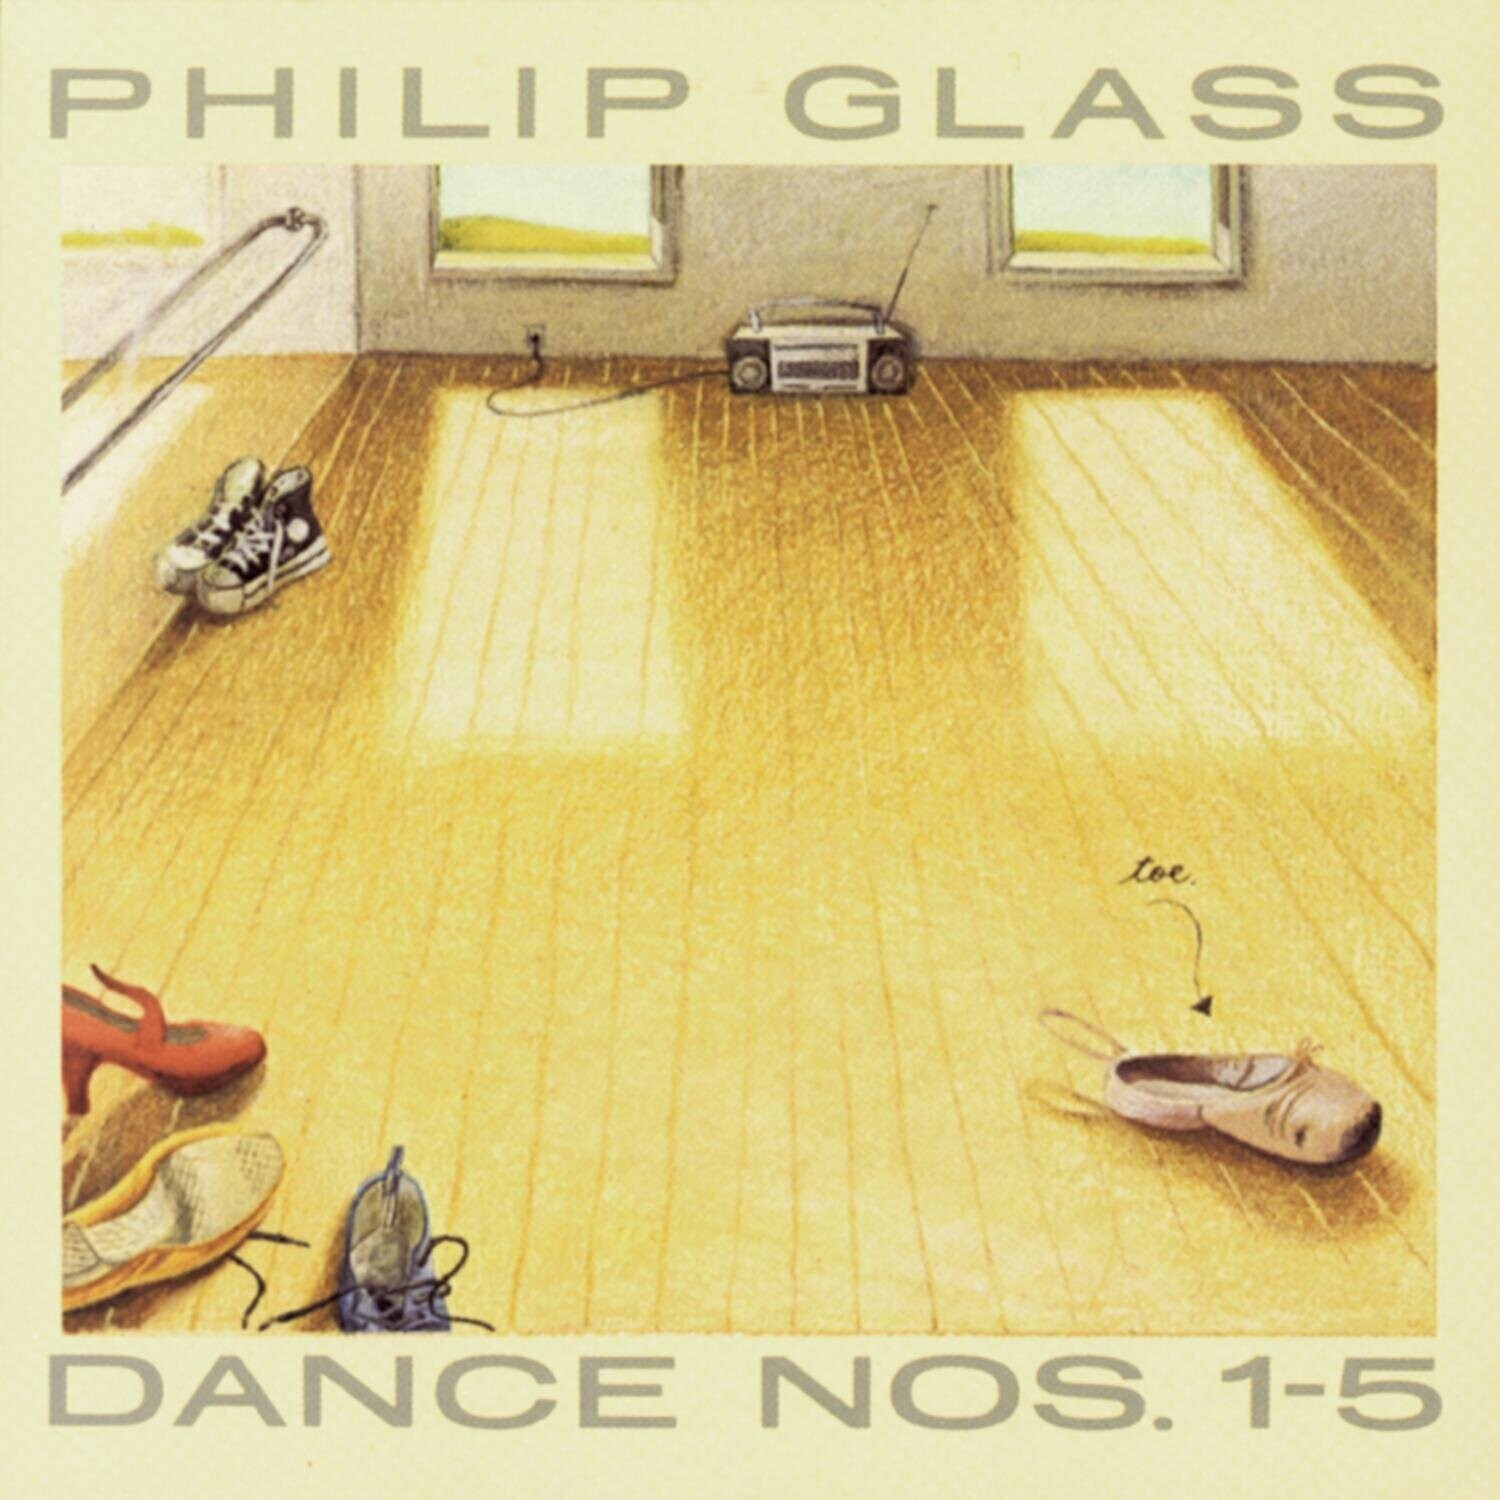 Philip Glass "Dance Nos. 1-5"